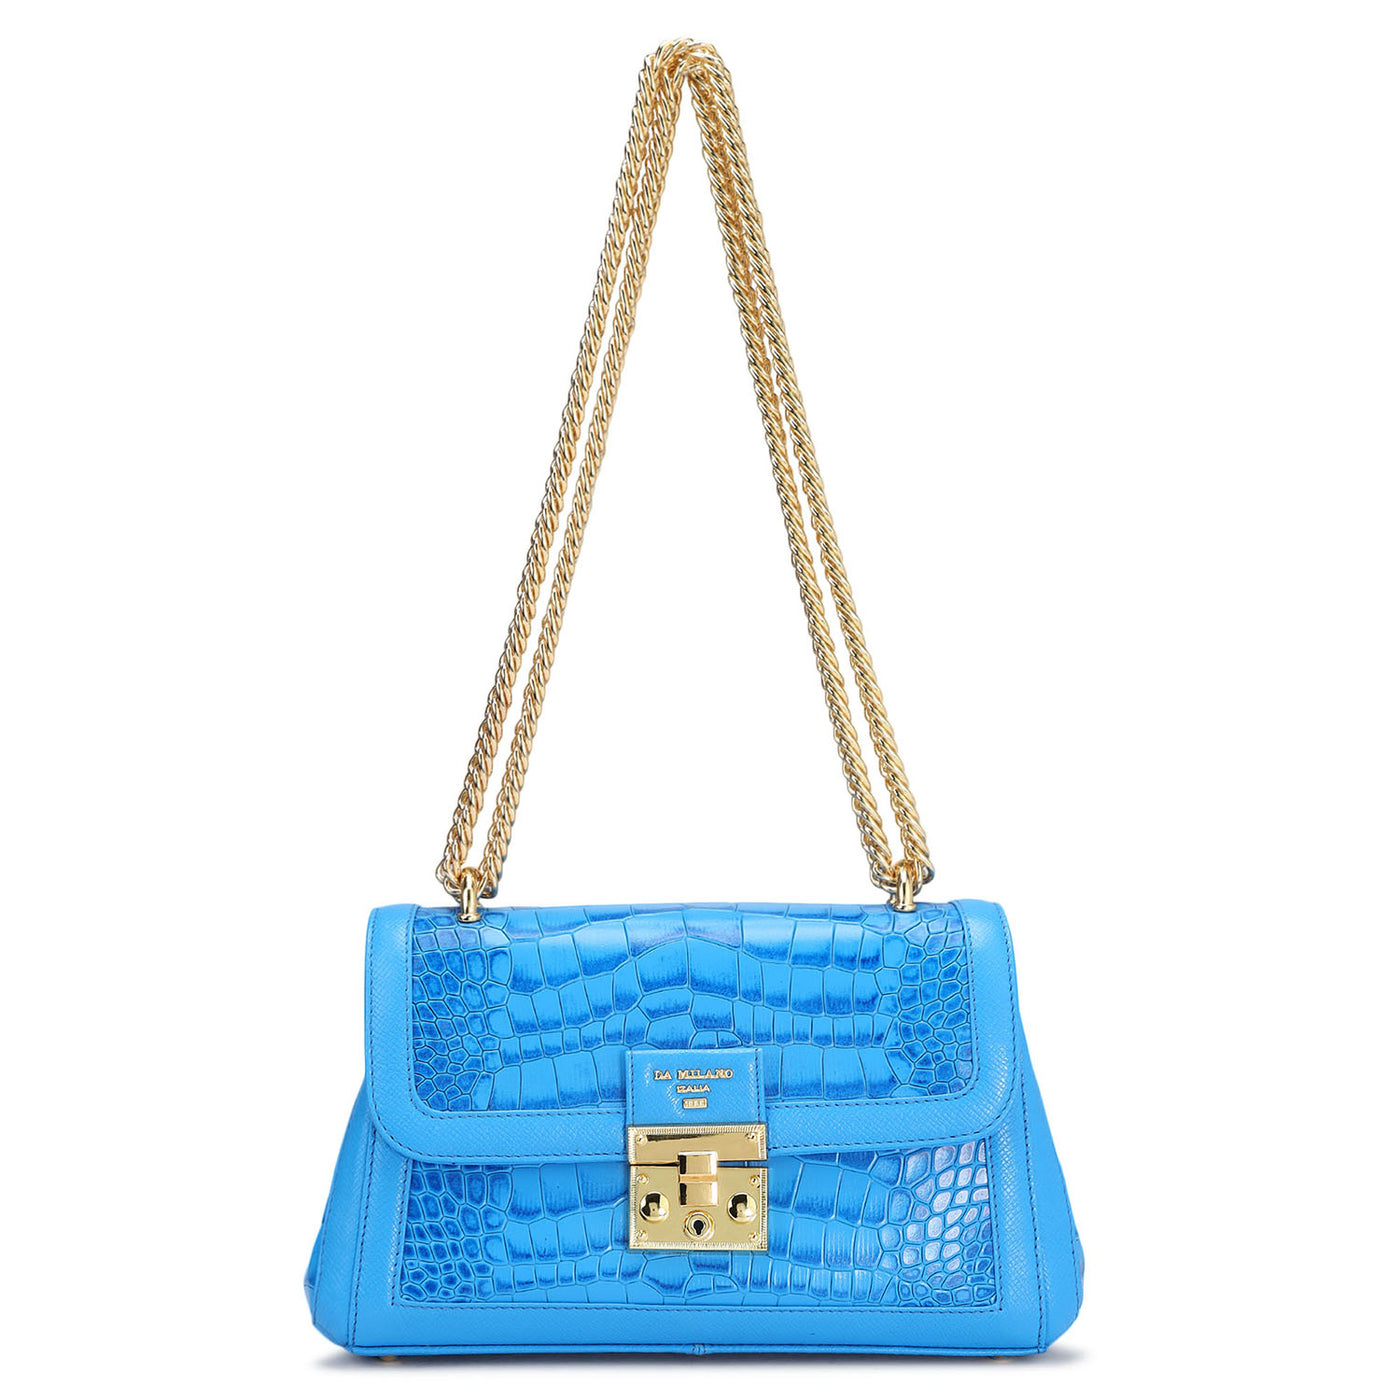 Small Croco Leather Shoulder Bag - Blue